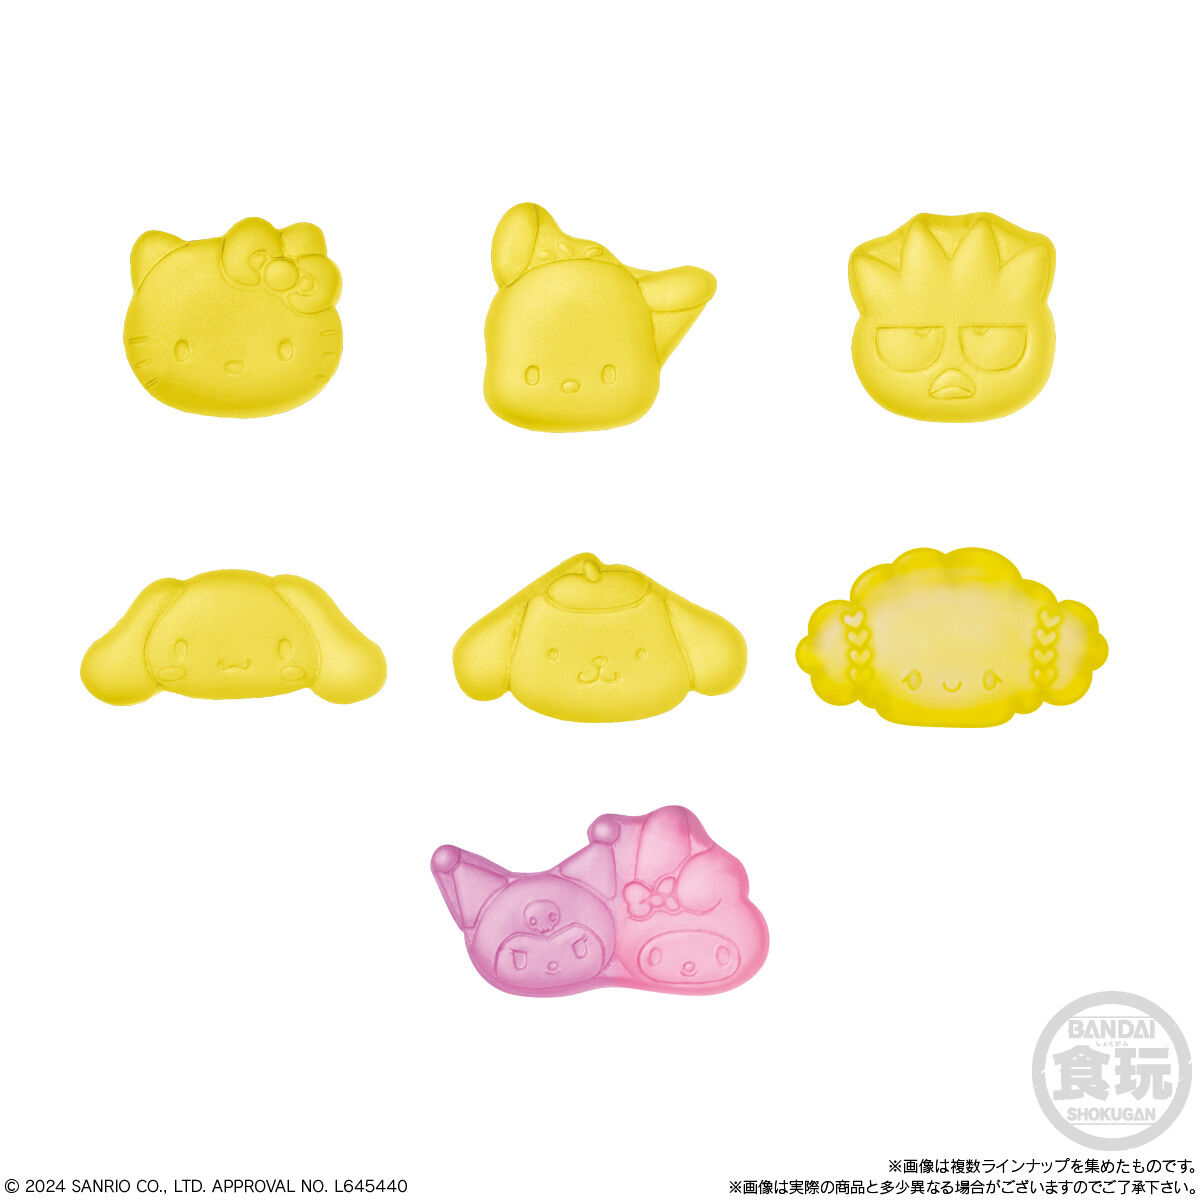 Sanrio Characters Rubber Mascot Gummi Vol.5-Single Pack (Random)-Bandai-Ace Cards &amp; Collectibles